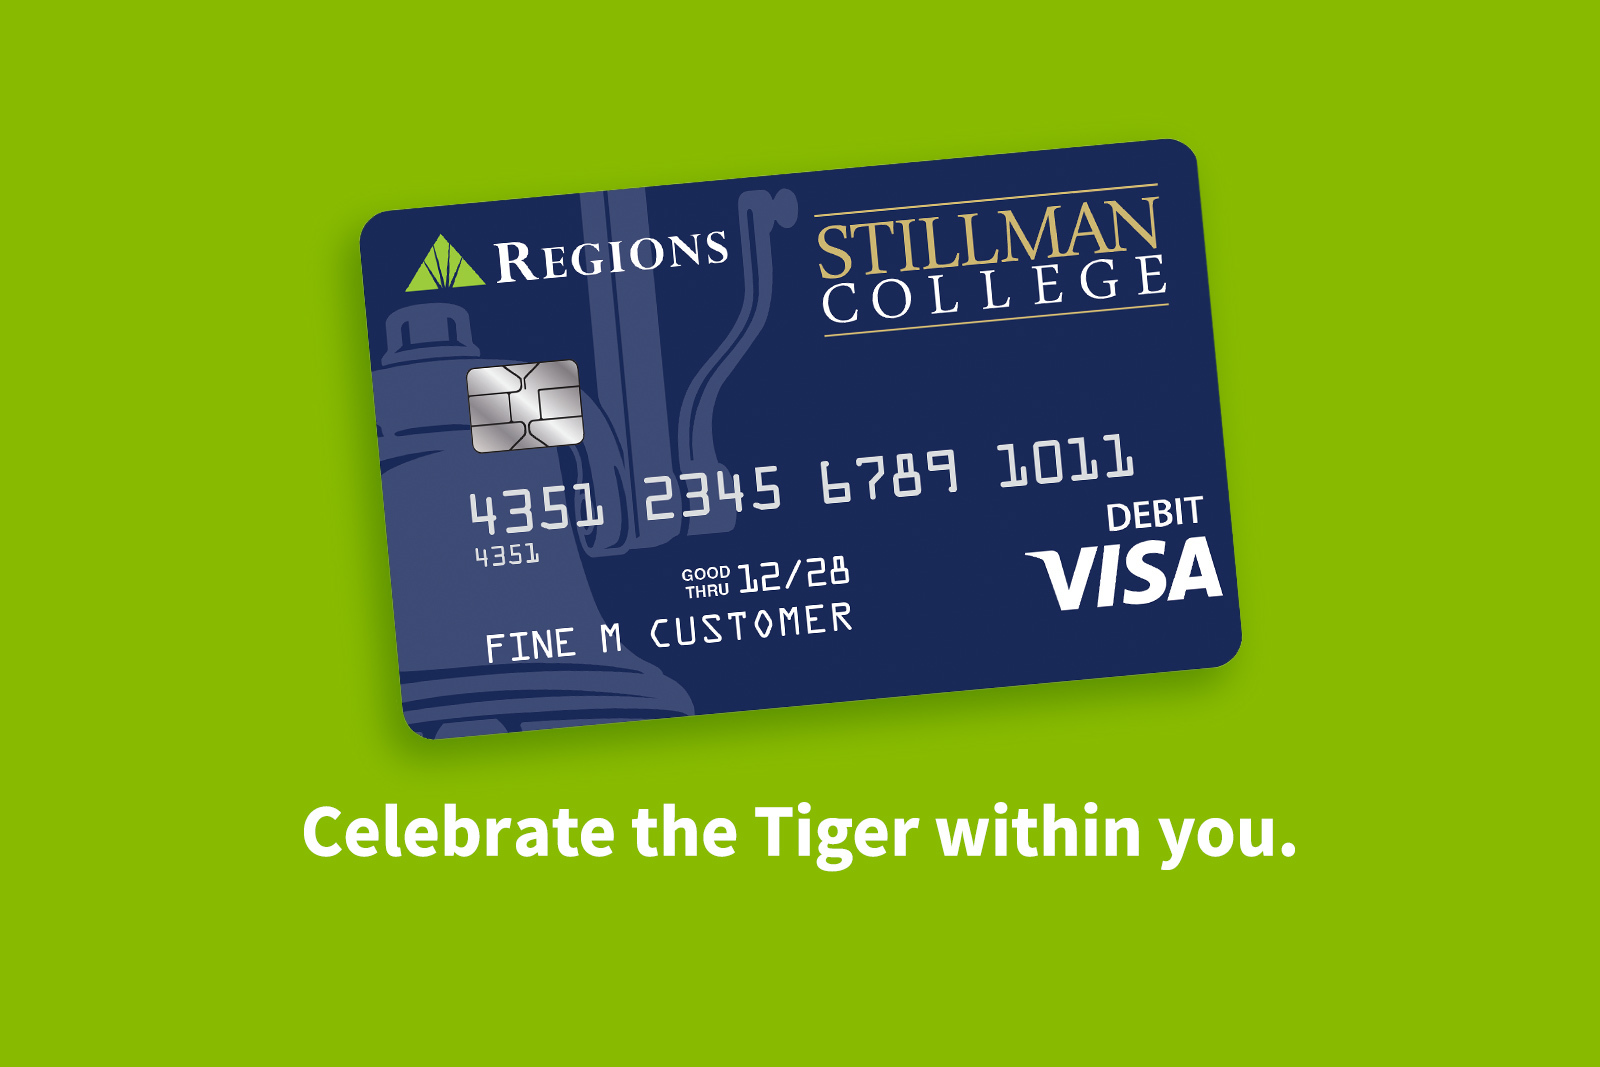 Stillman College, Regions Debit Card. Tagline, "Celebrate the Tiger within...